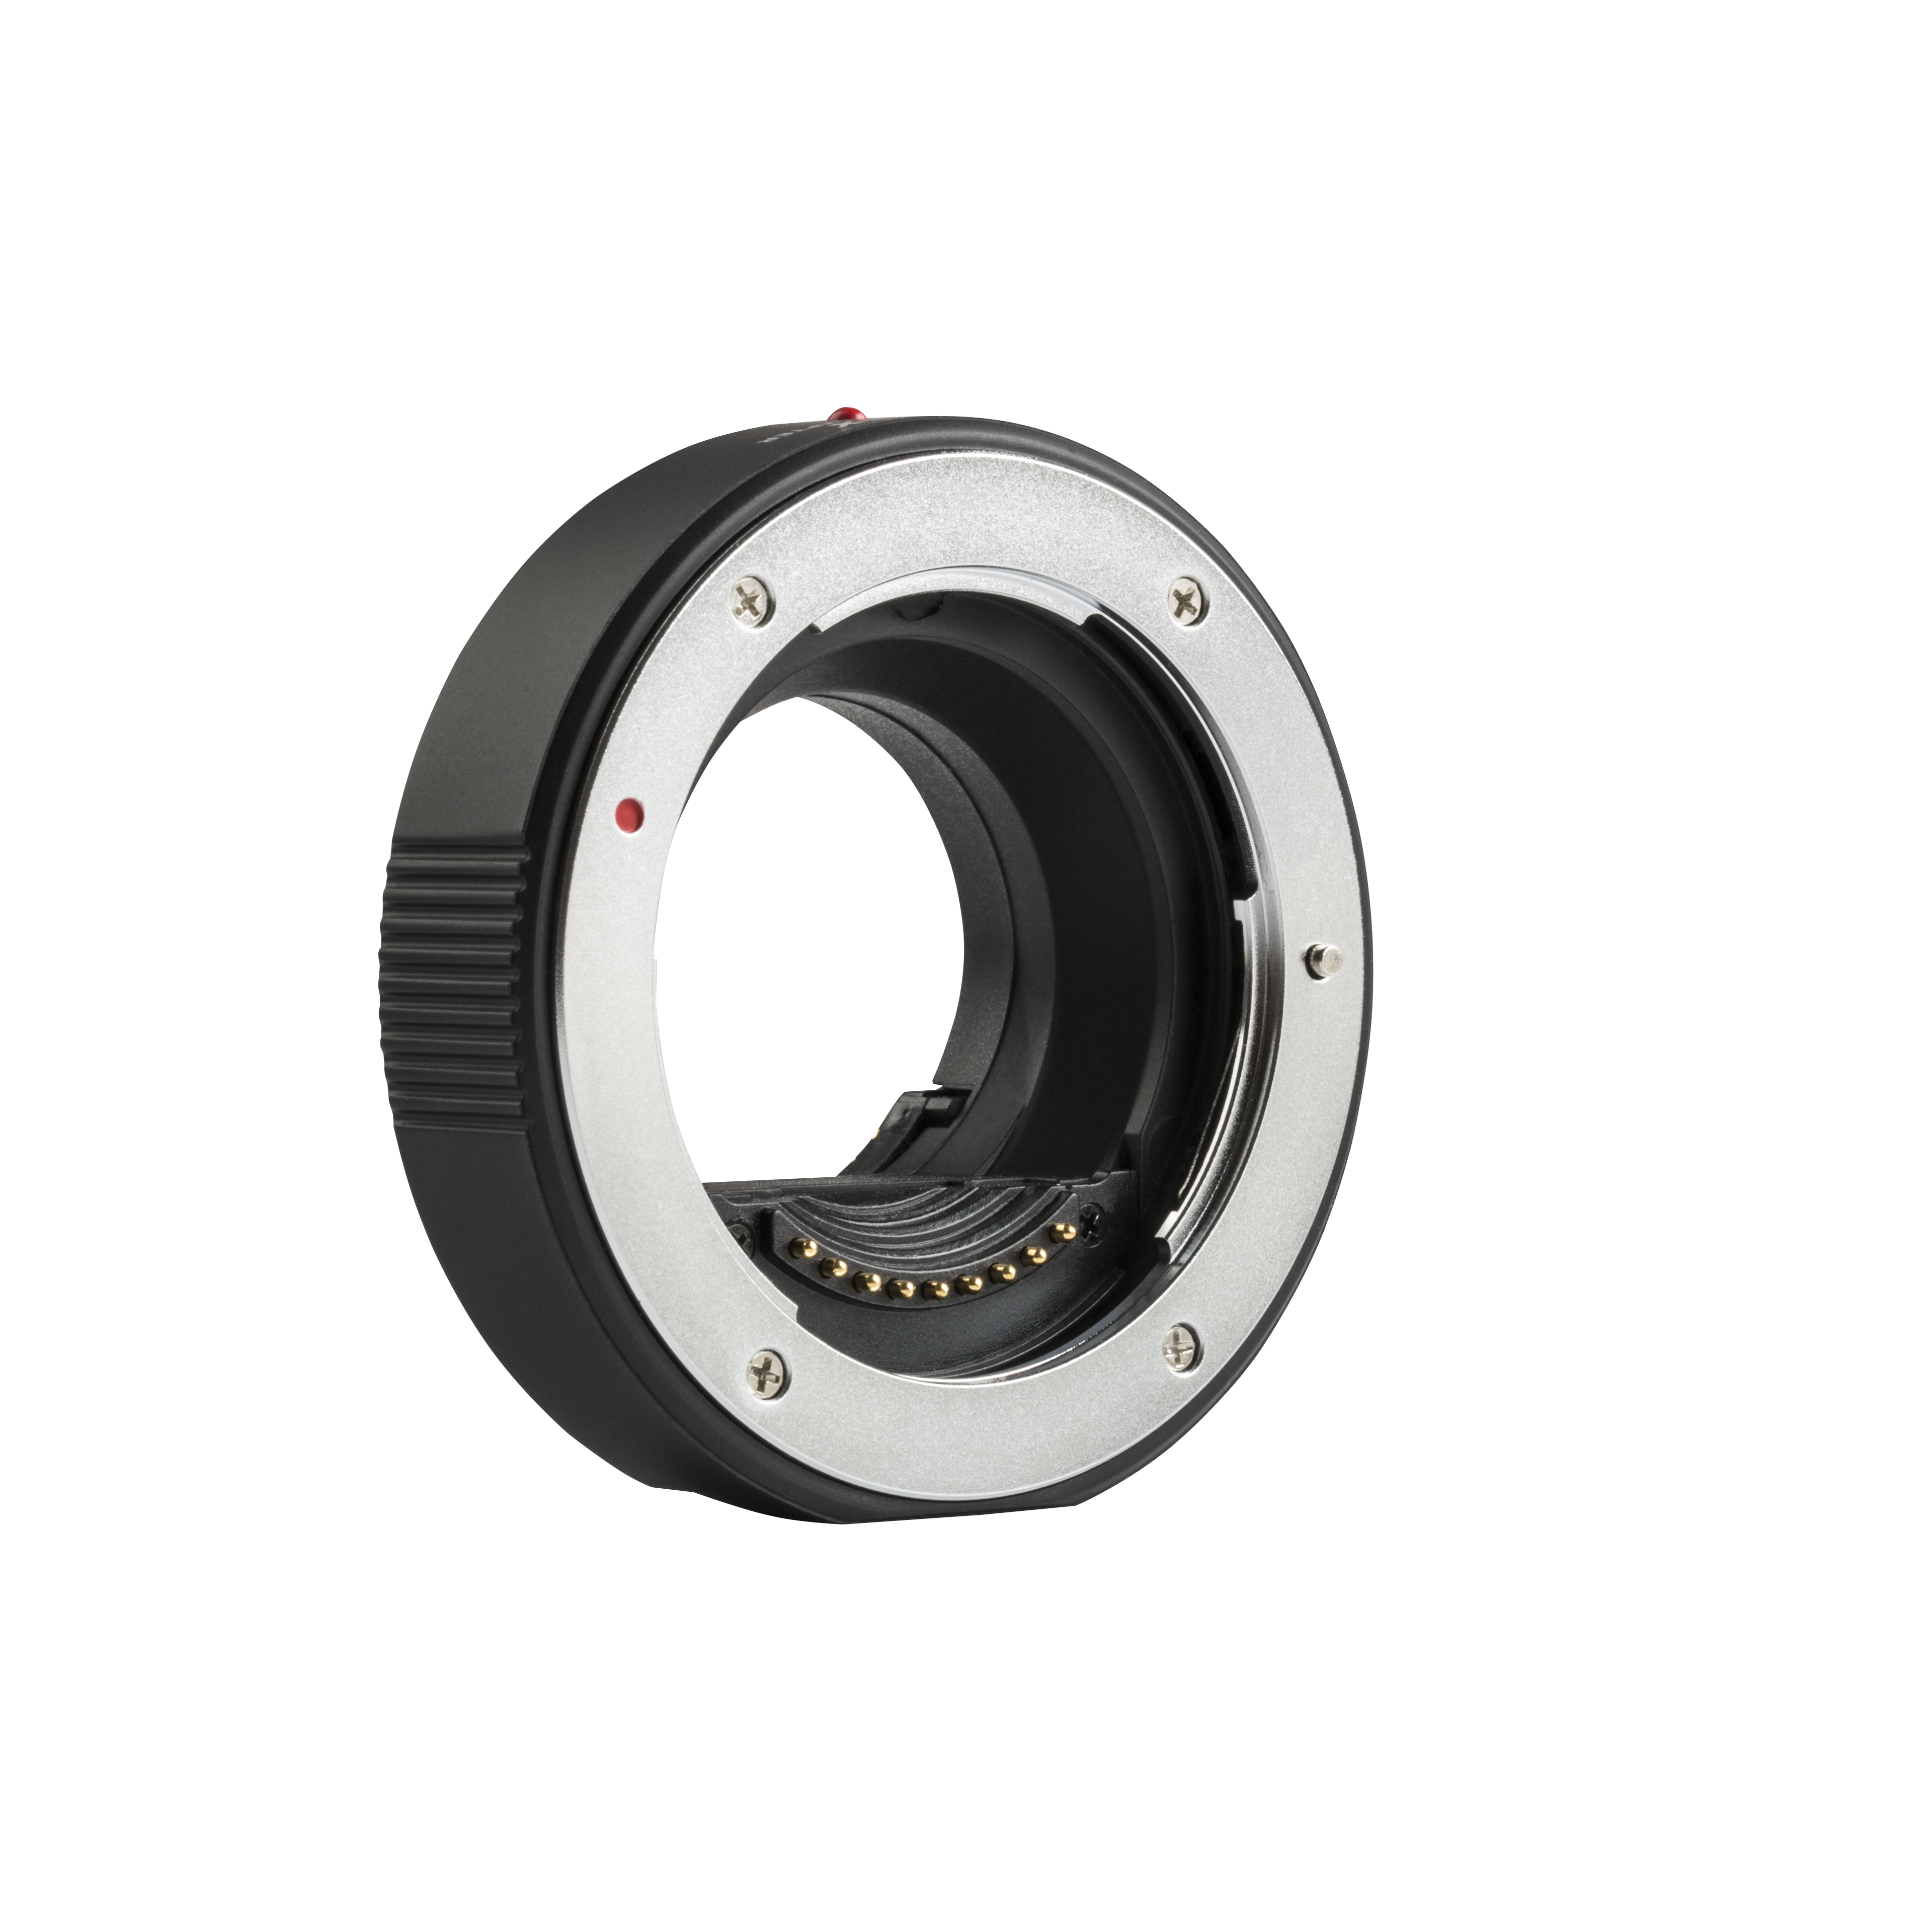 Viltrox JY-43F Autofocus Adapter for FT mount Lens Goes to MFT M43 Mount Camera